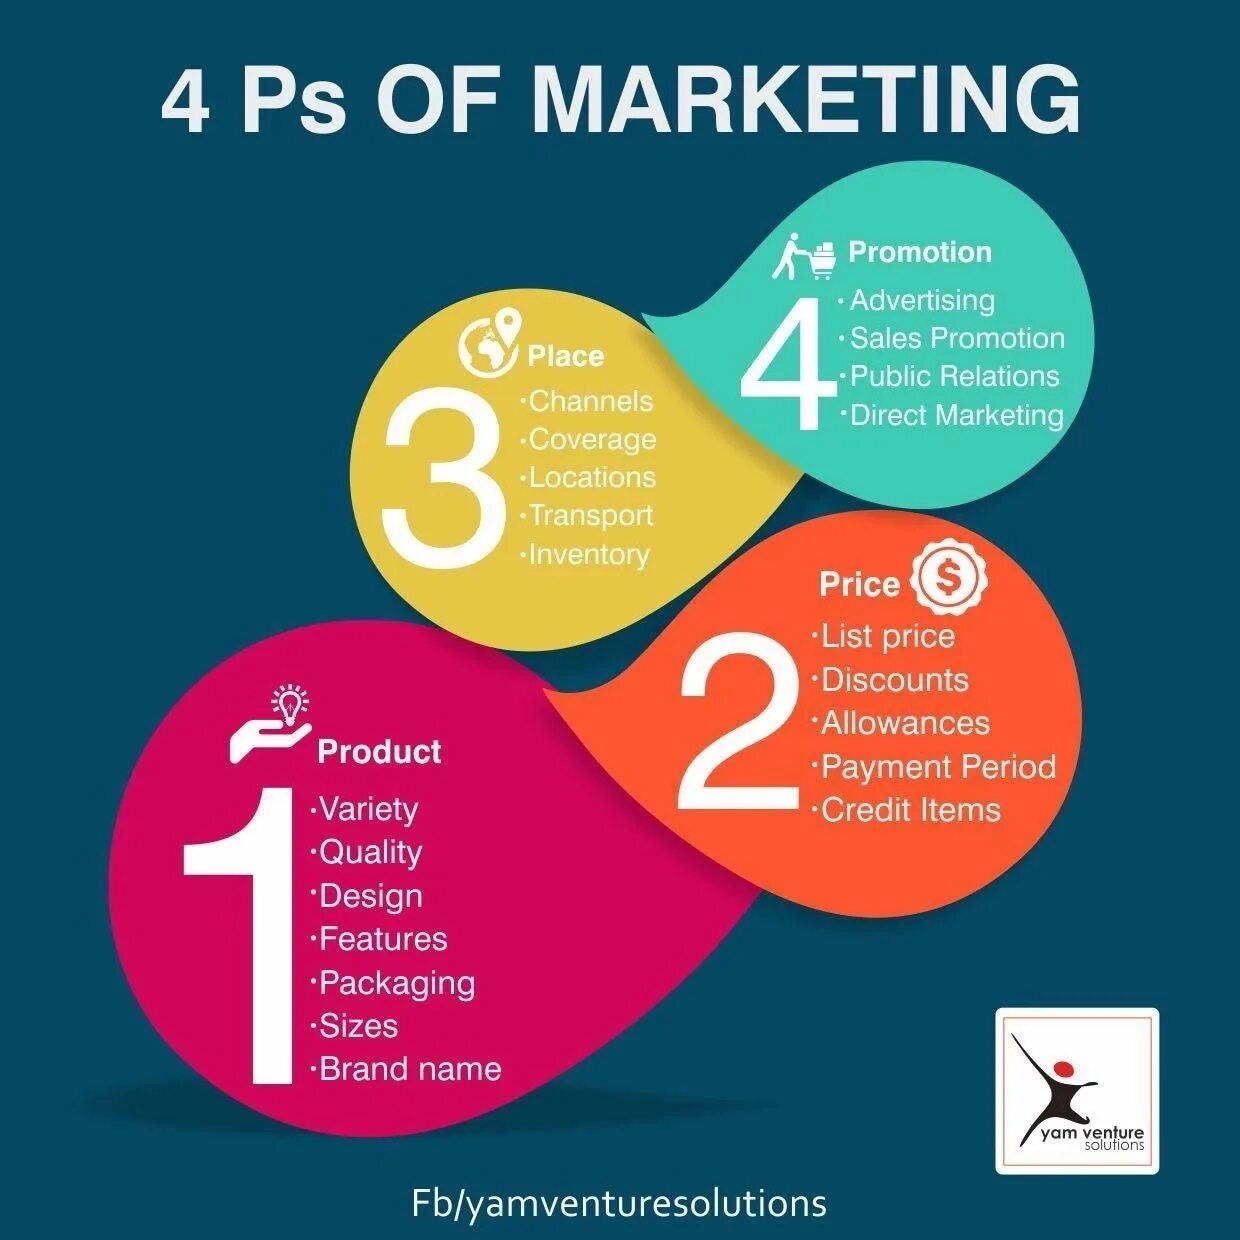 4 promotion. Маркетинг. 4ps маркетинг. Продакт маркетинг. 4 PS of marketing.